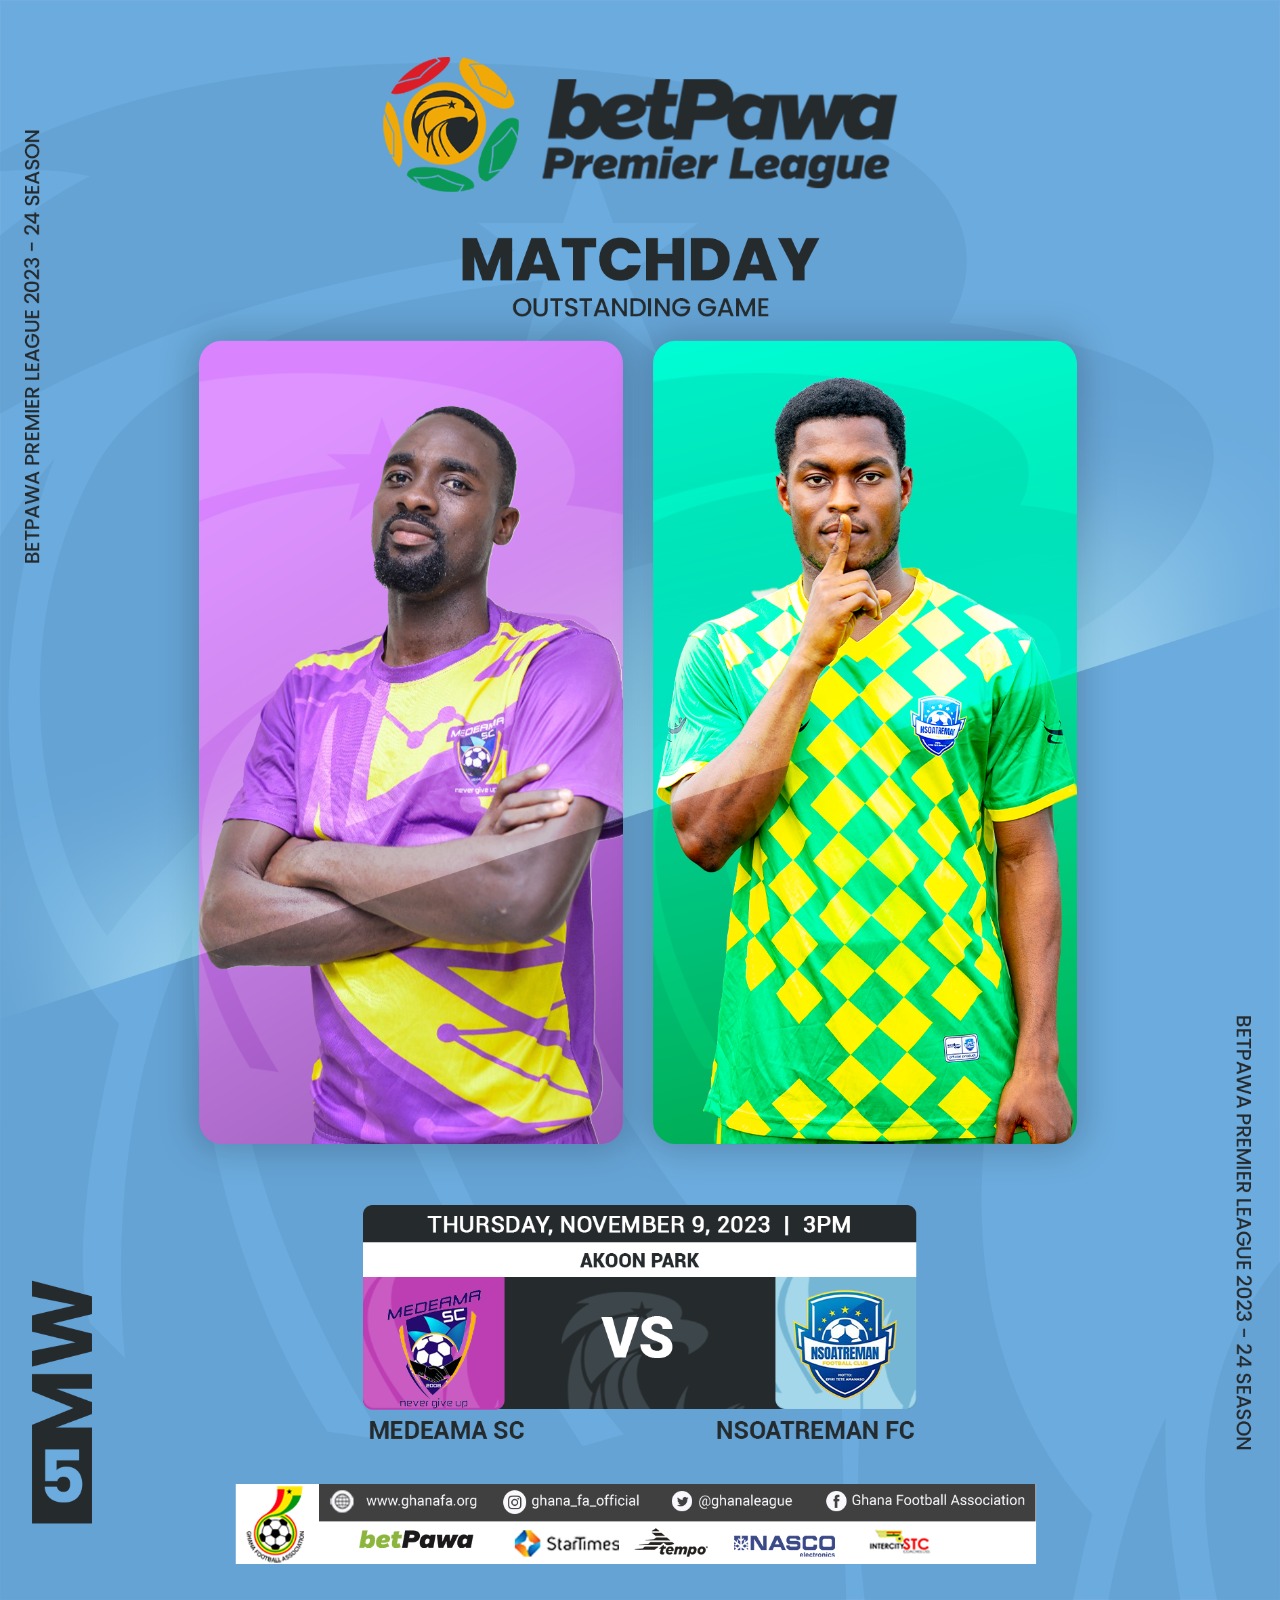 Champions Medeama SC battle Nsoatreman FC Thursday